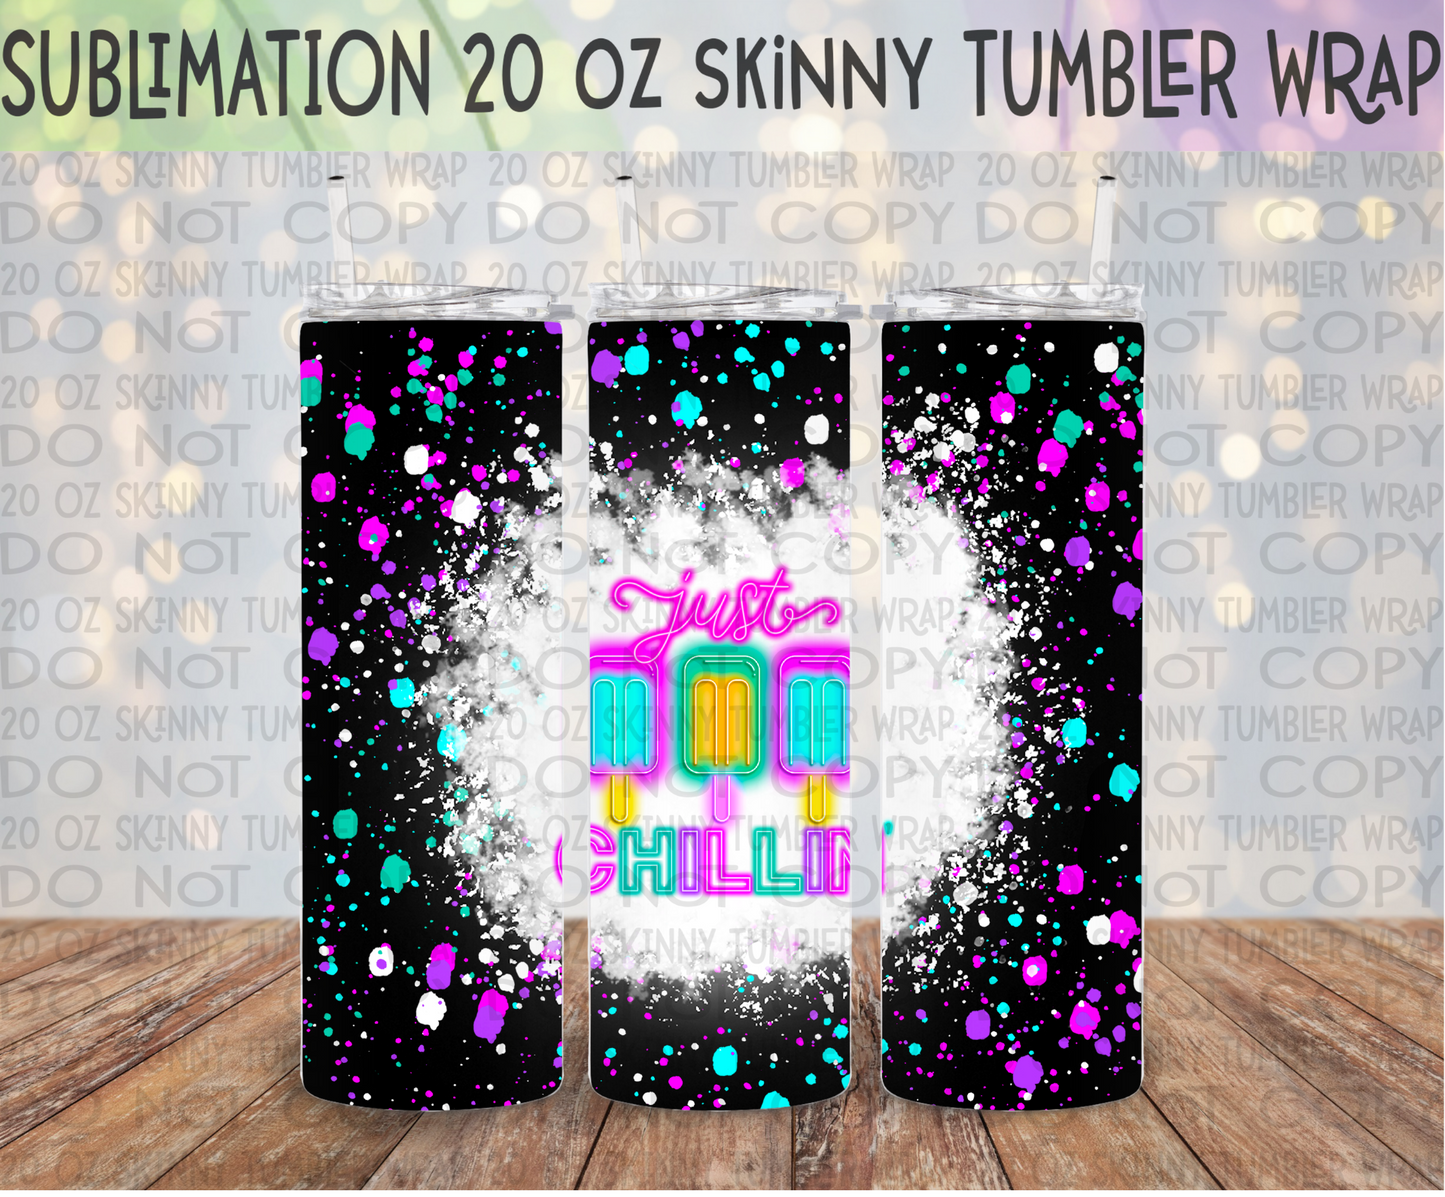 Just Chillin' 20 Oz Skinny Tumbler Wrap - Sublimation Transfer - RTS